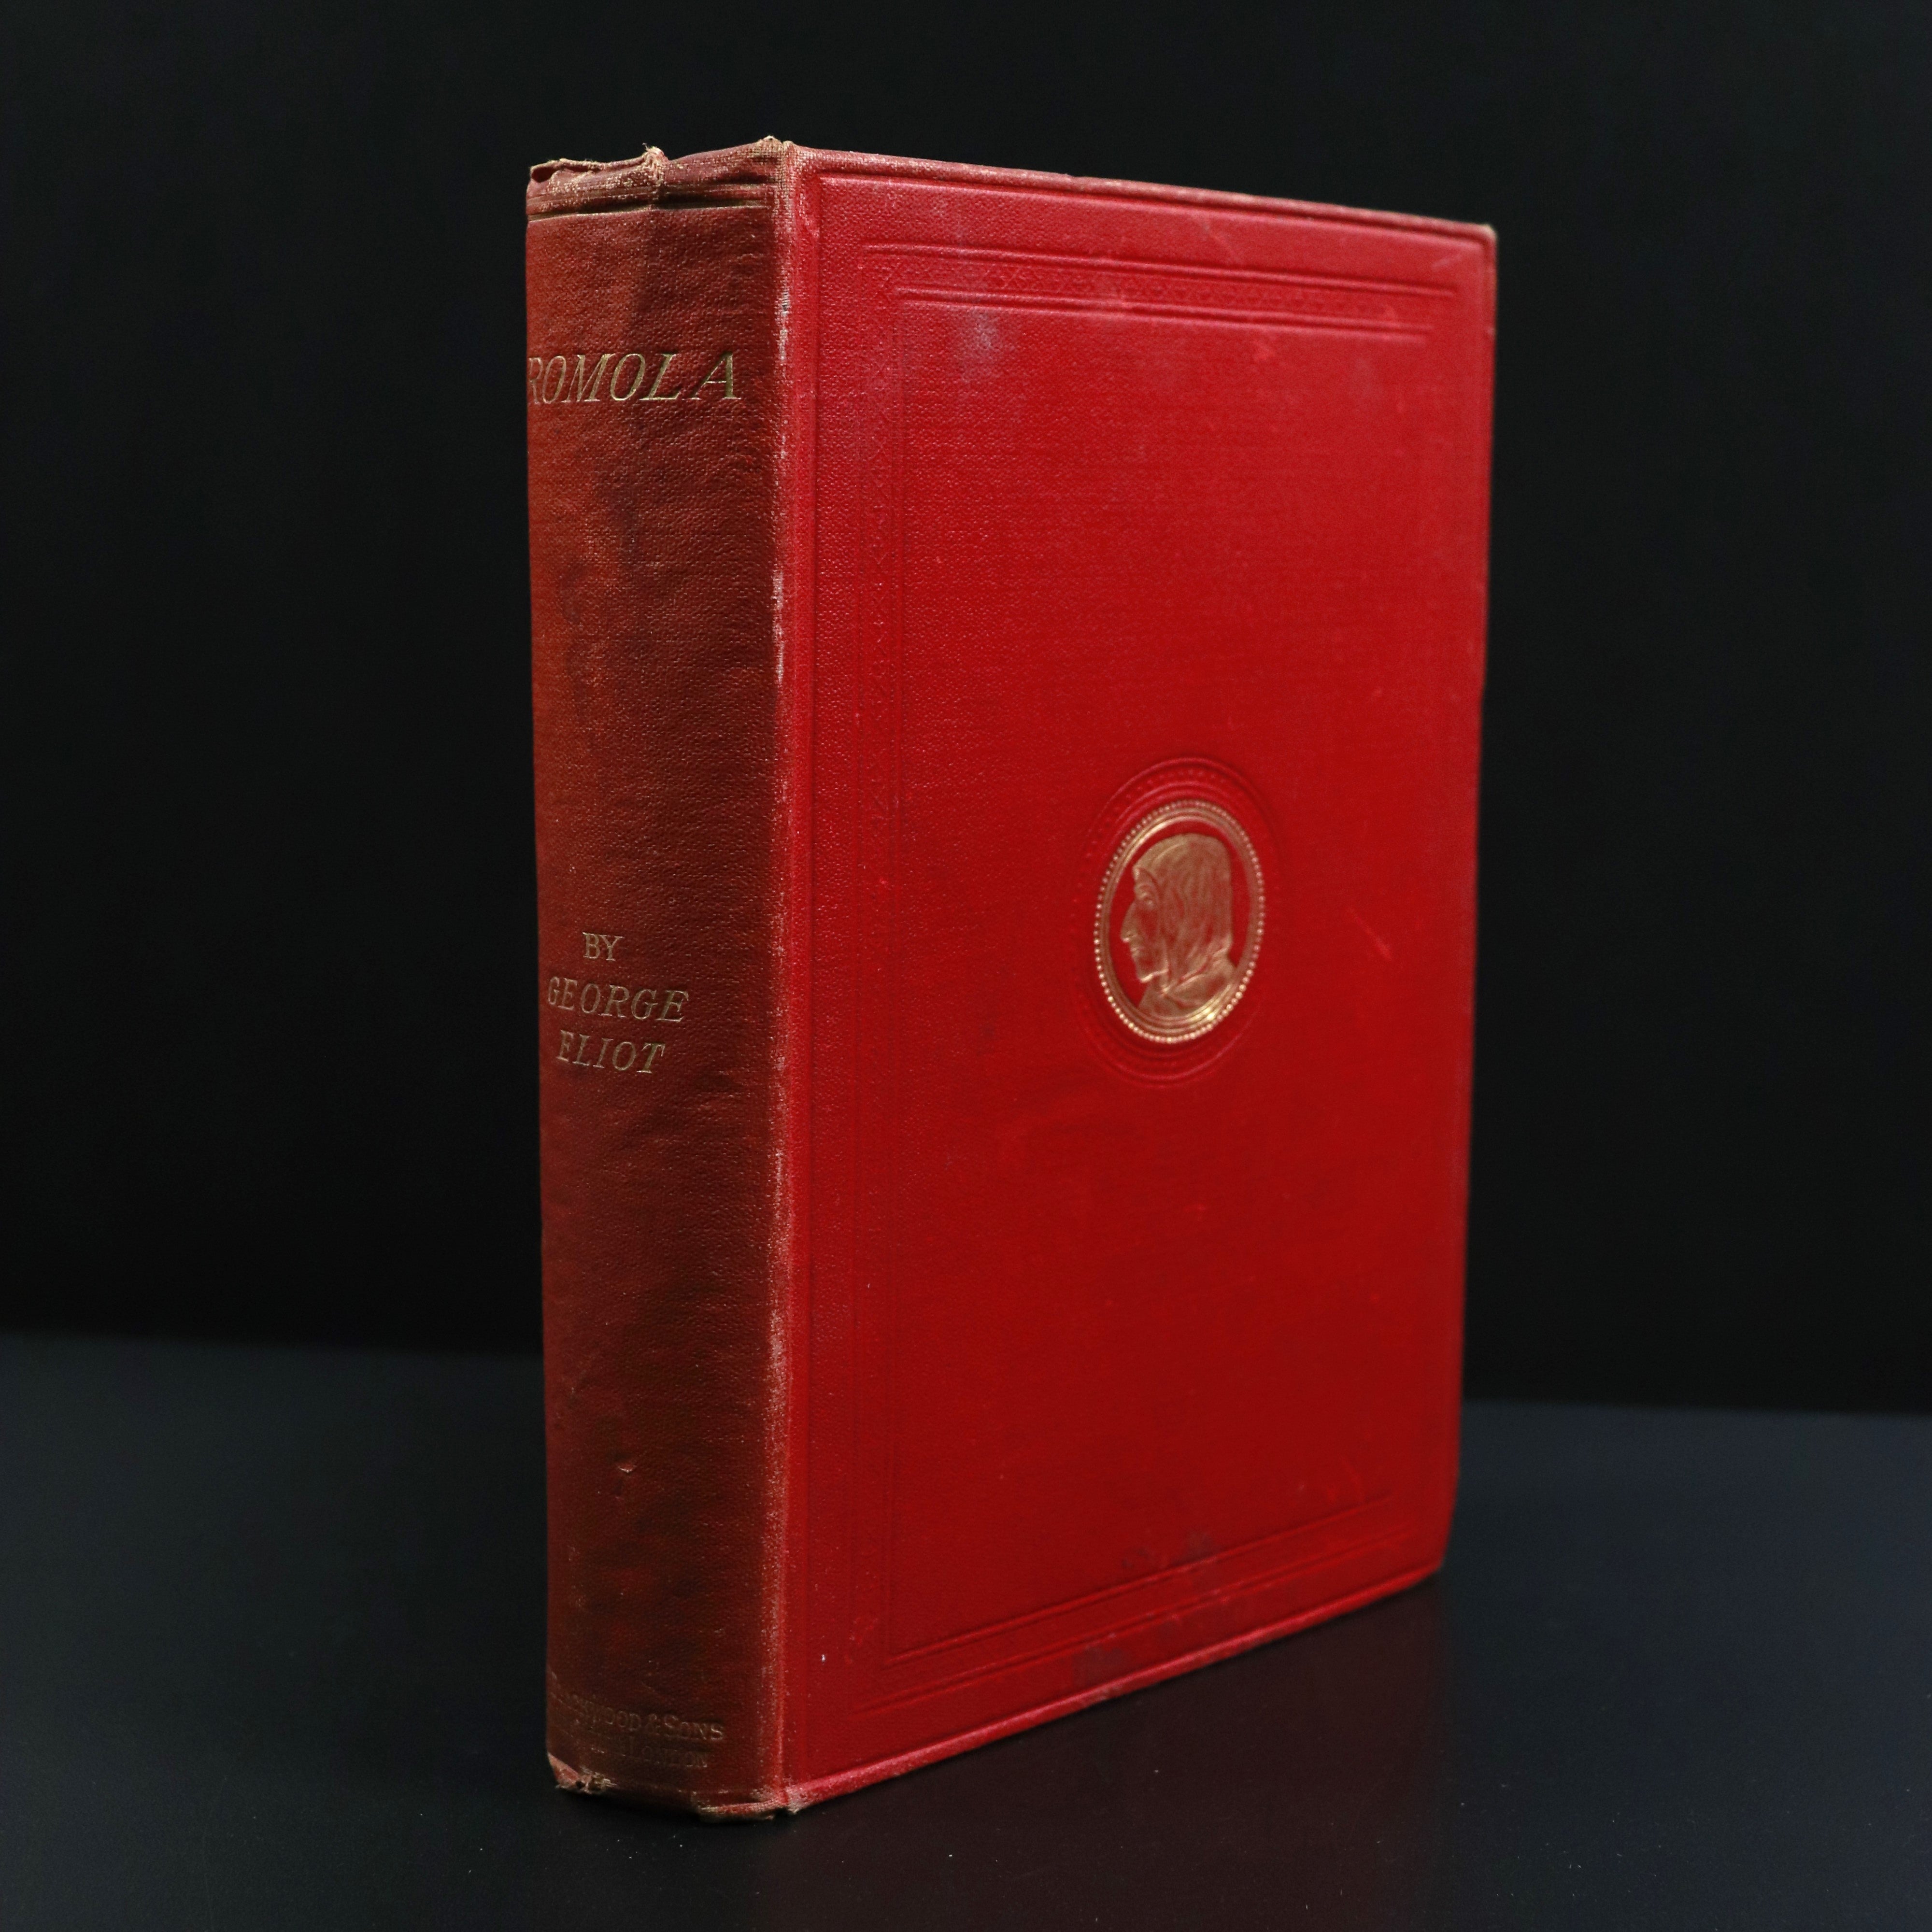 c1894 Romola by George Eliot Antique Fiction Book Female Author